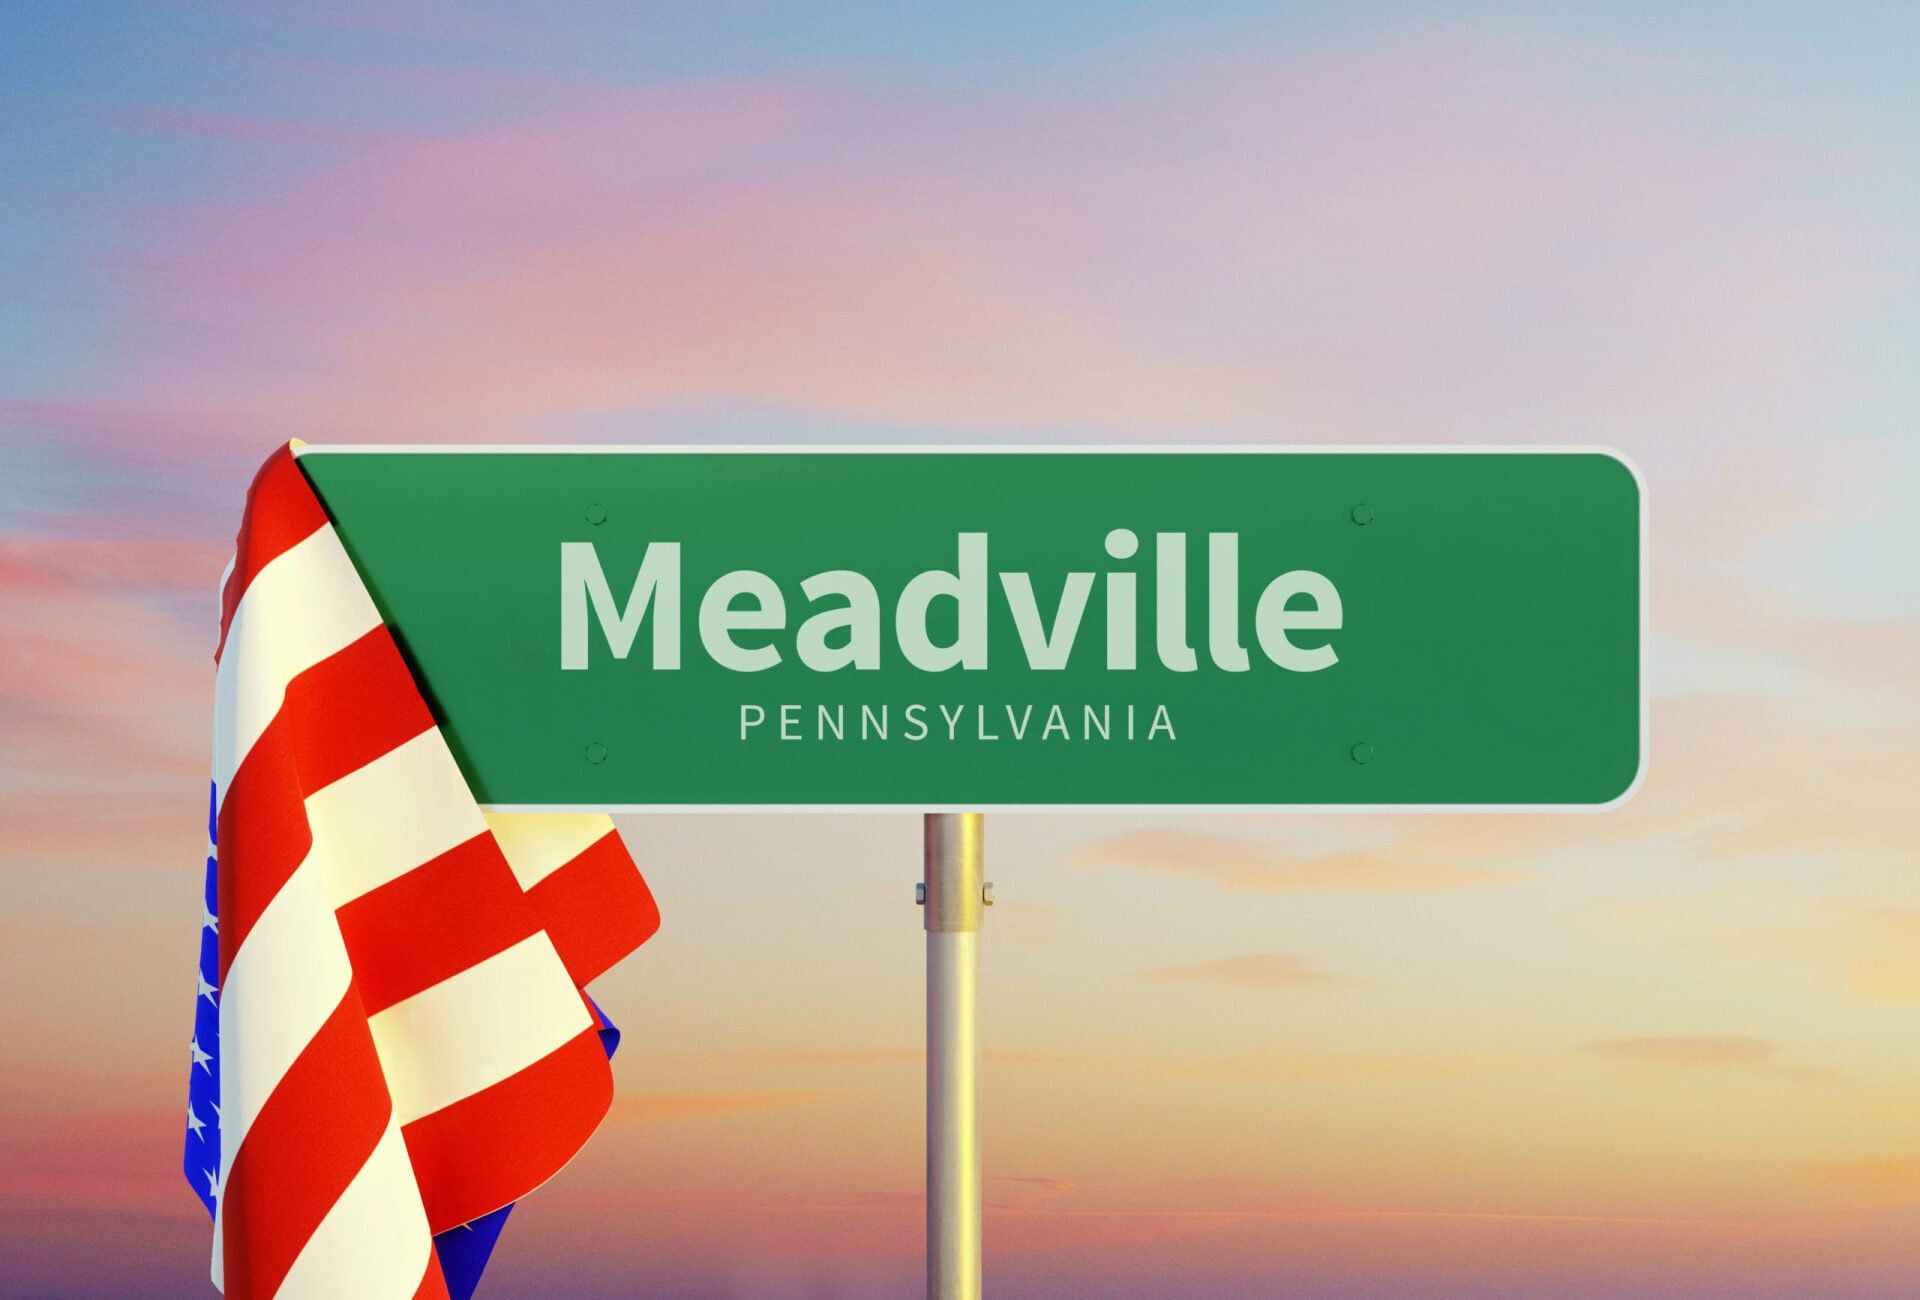 Meadville Pennsylvania sign